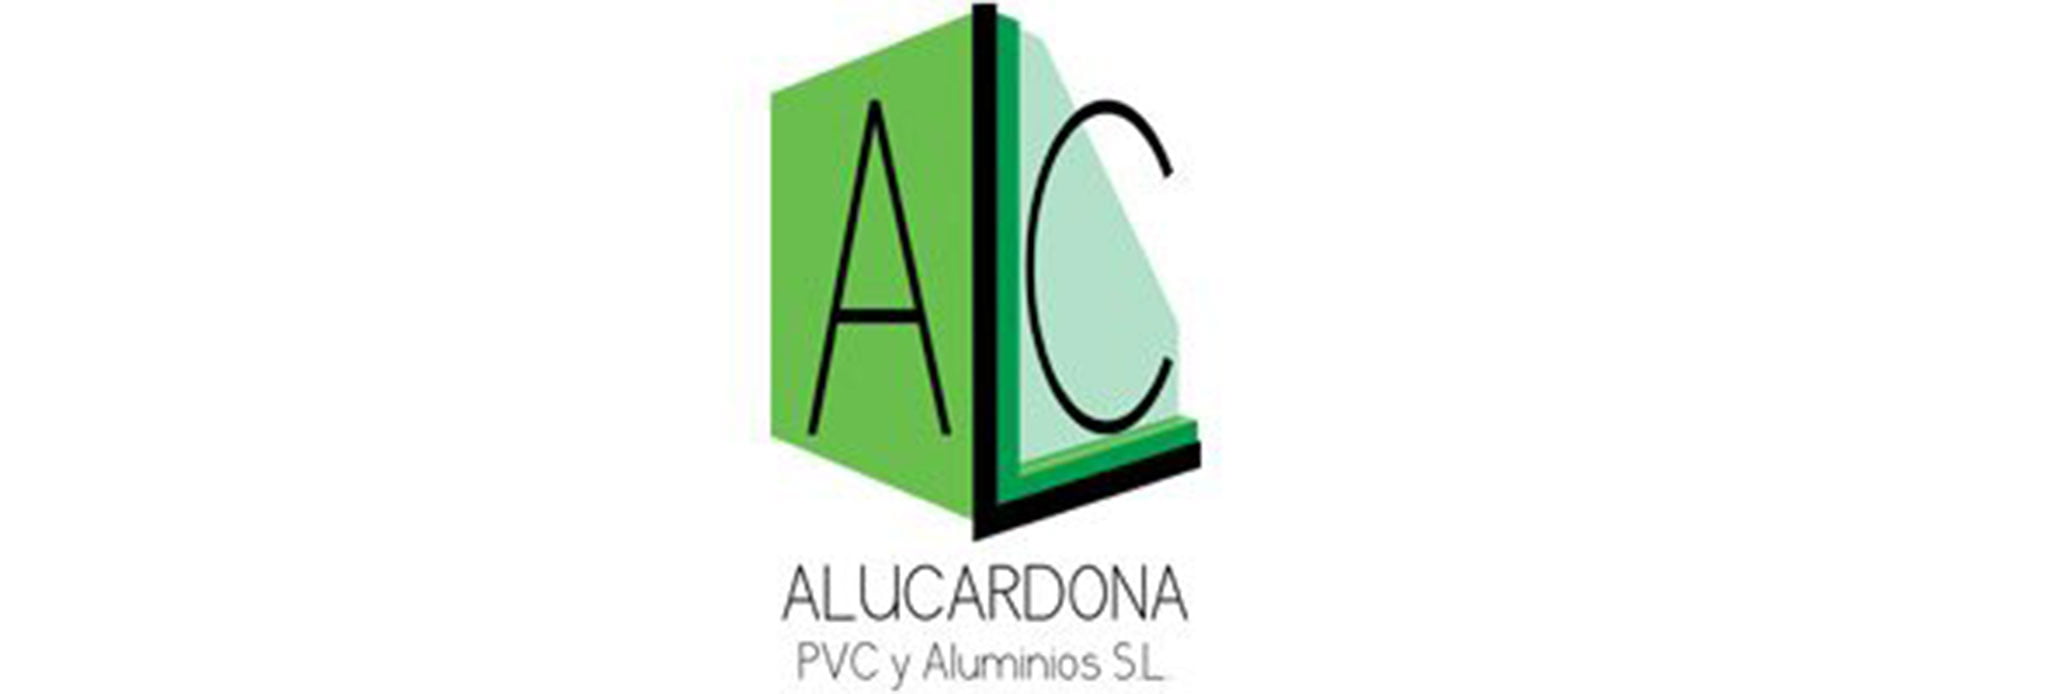 Logotipo de Alucardona Pvc y Aluminios, S.L.